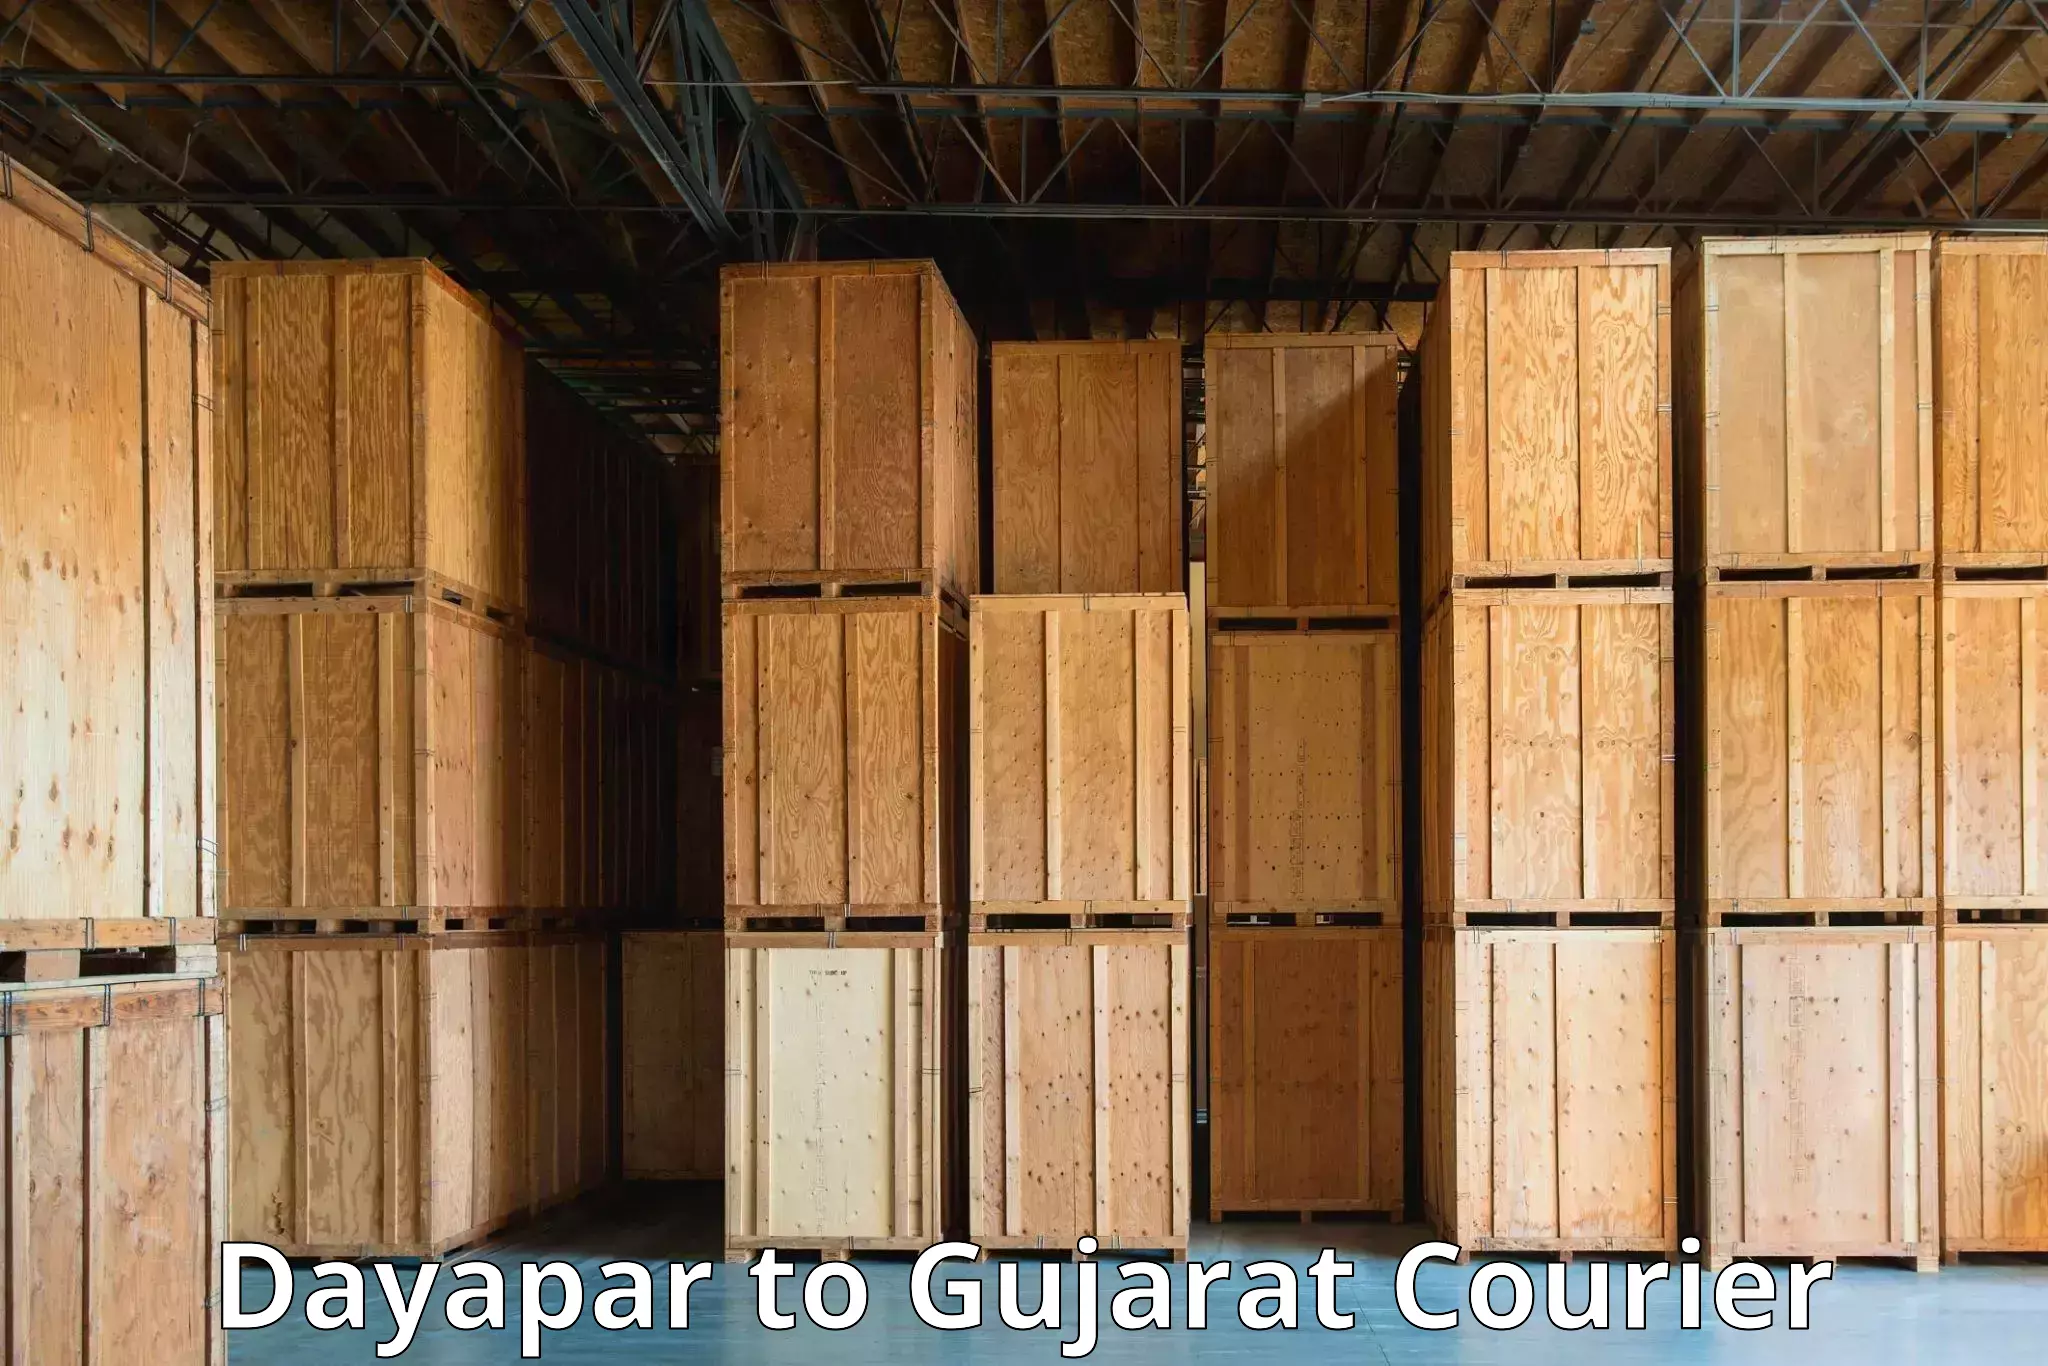 Global shipping solutions Dayapar to Patan Gujarat